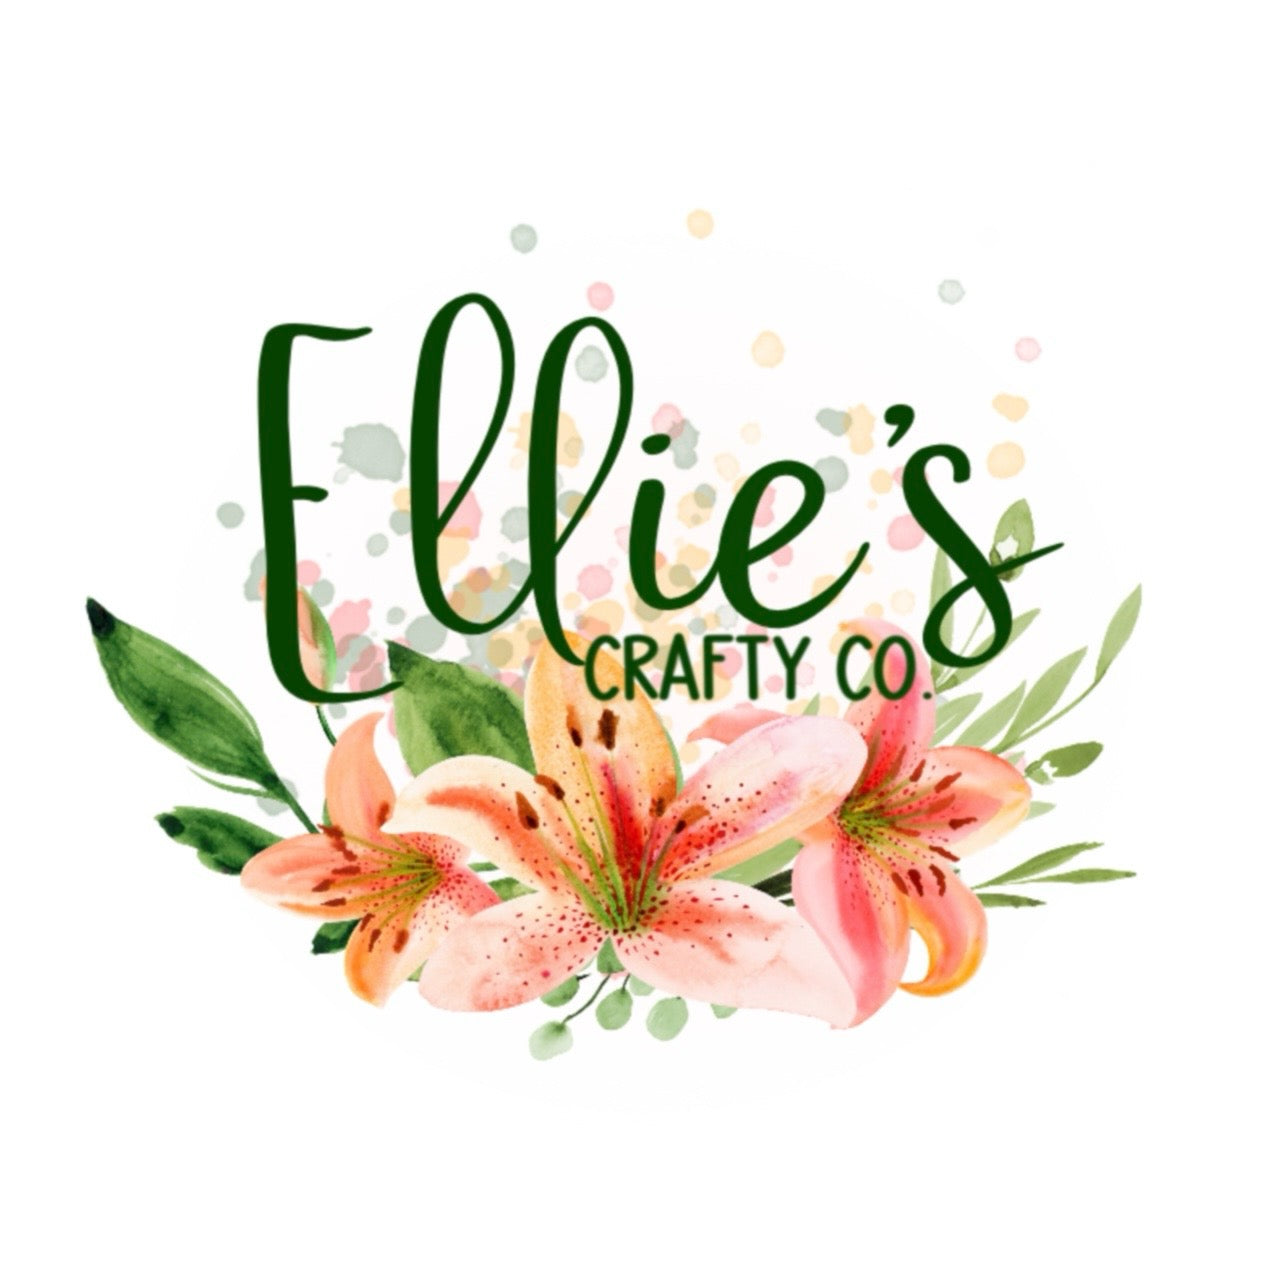 Ellie's Crafty Co